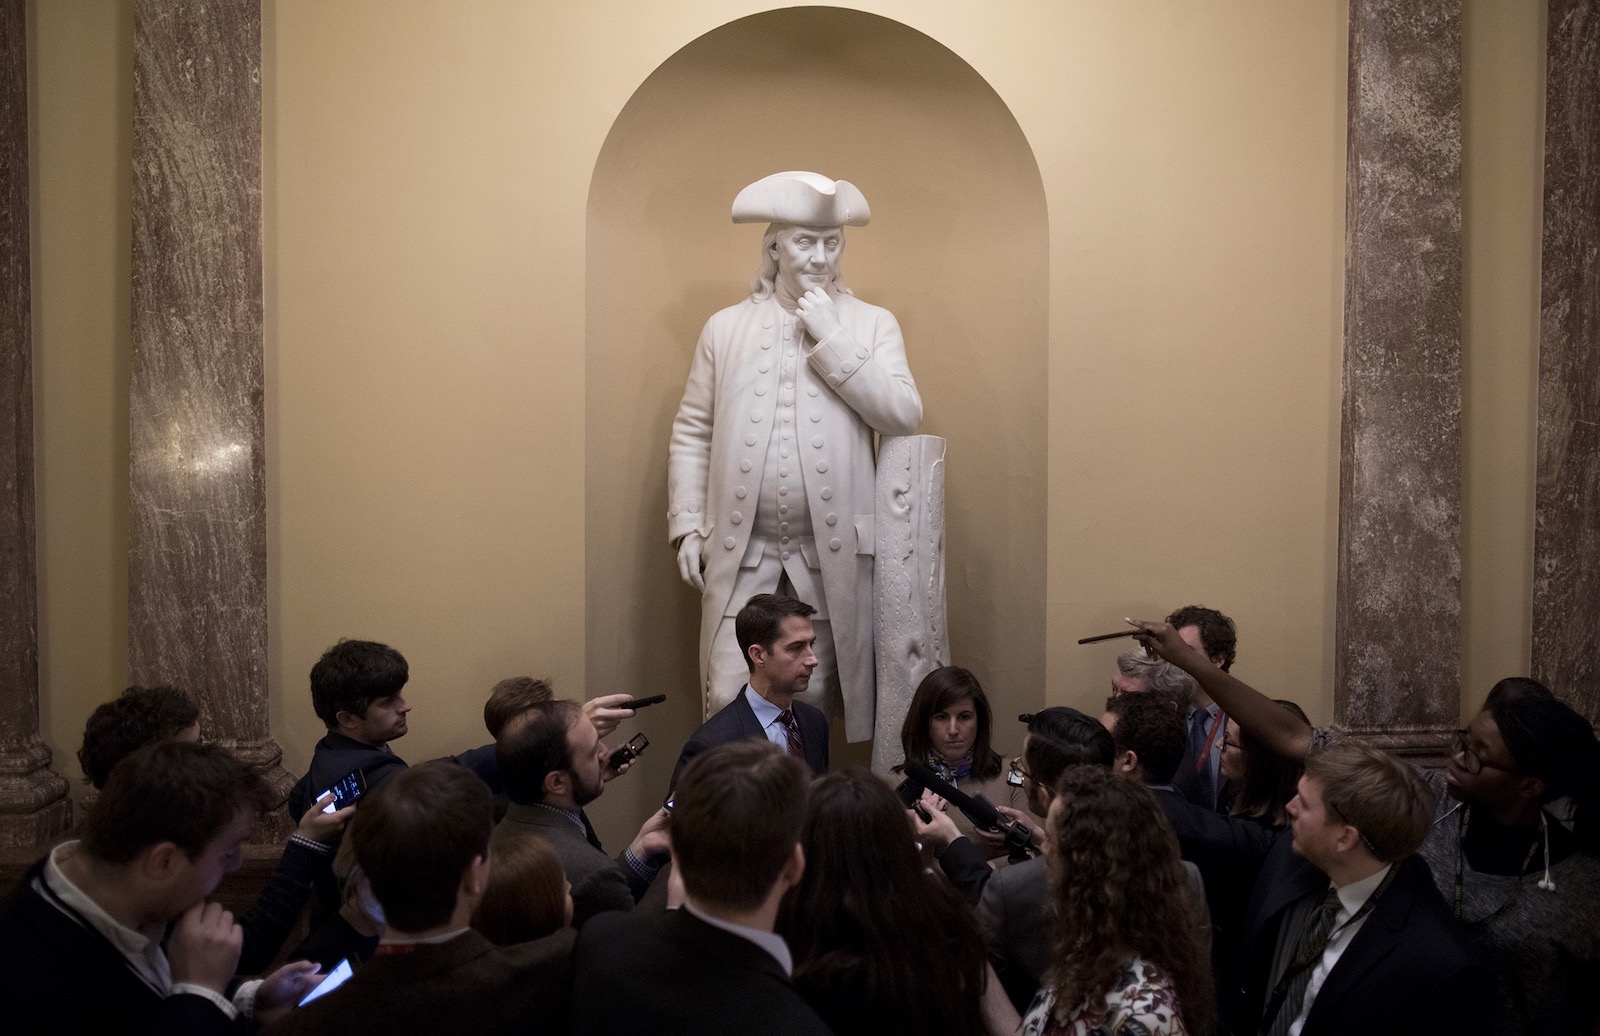 Hiram Powers’s statue of Ben Franklin, Capitol